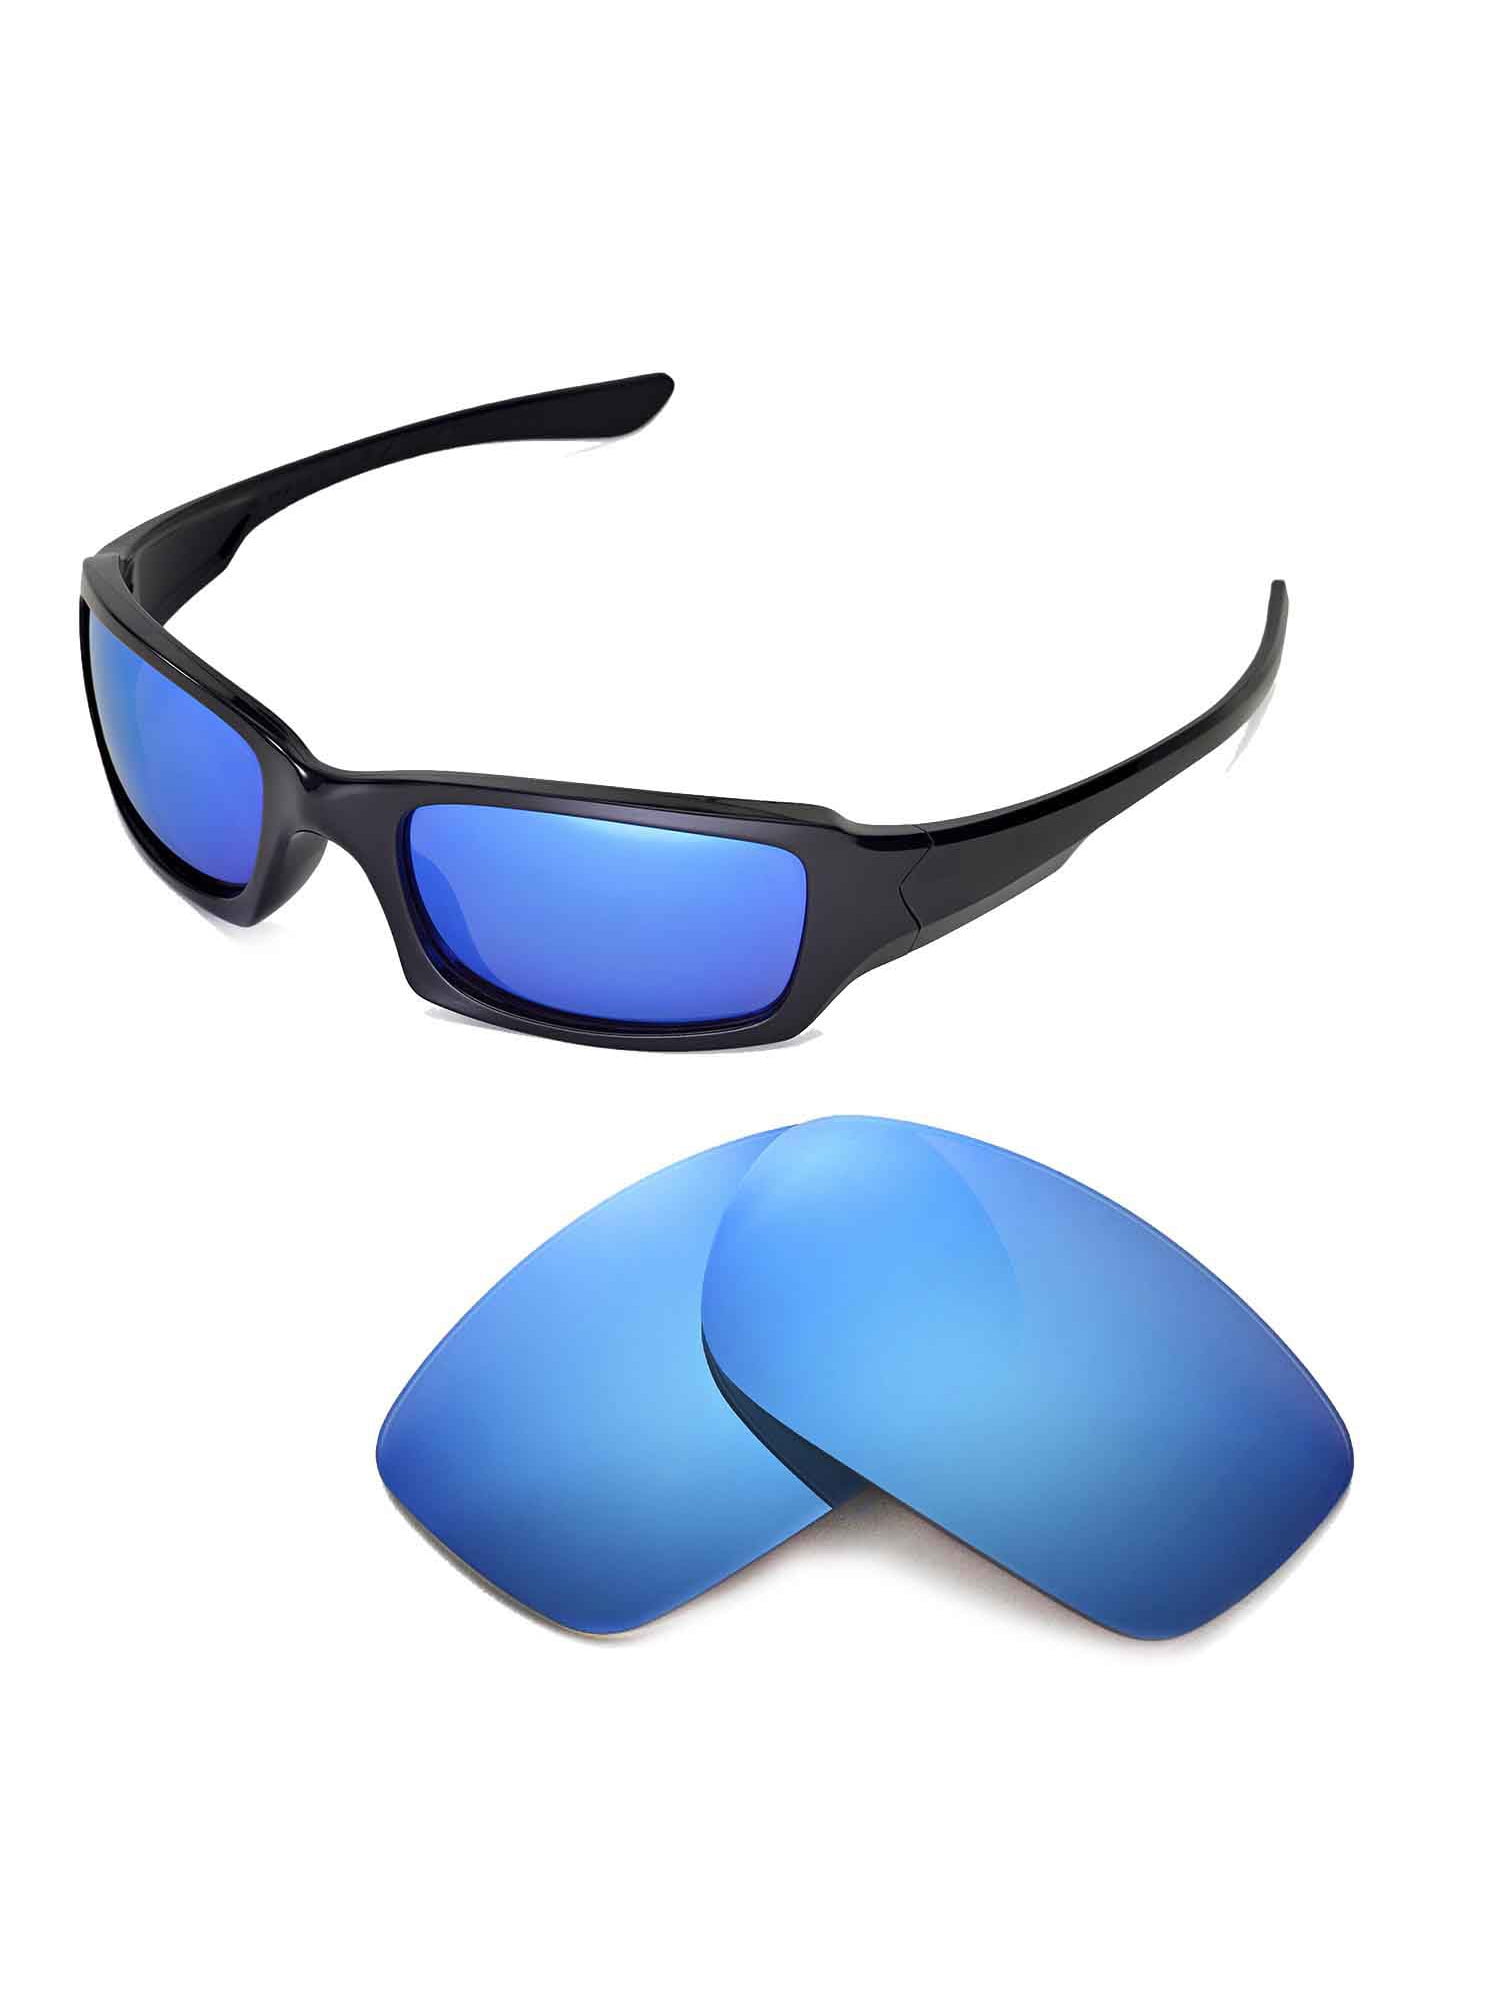 Oakley Blue Polarized Sunglasses Top Sellers, 52% OFF | www.hcb.cat